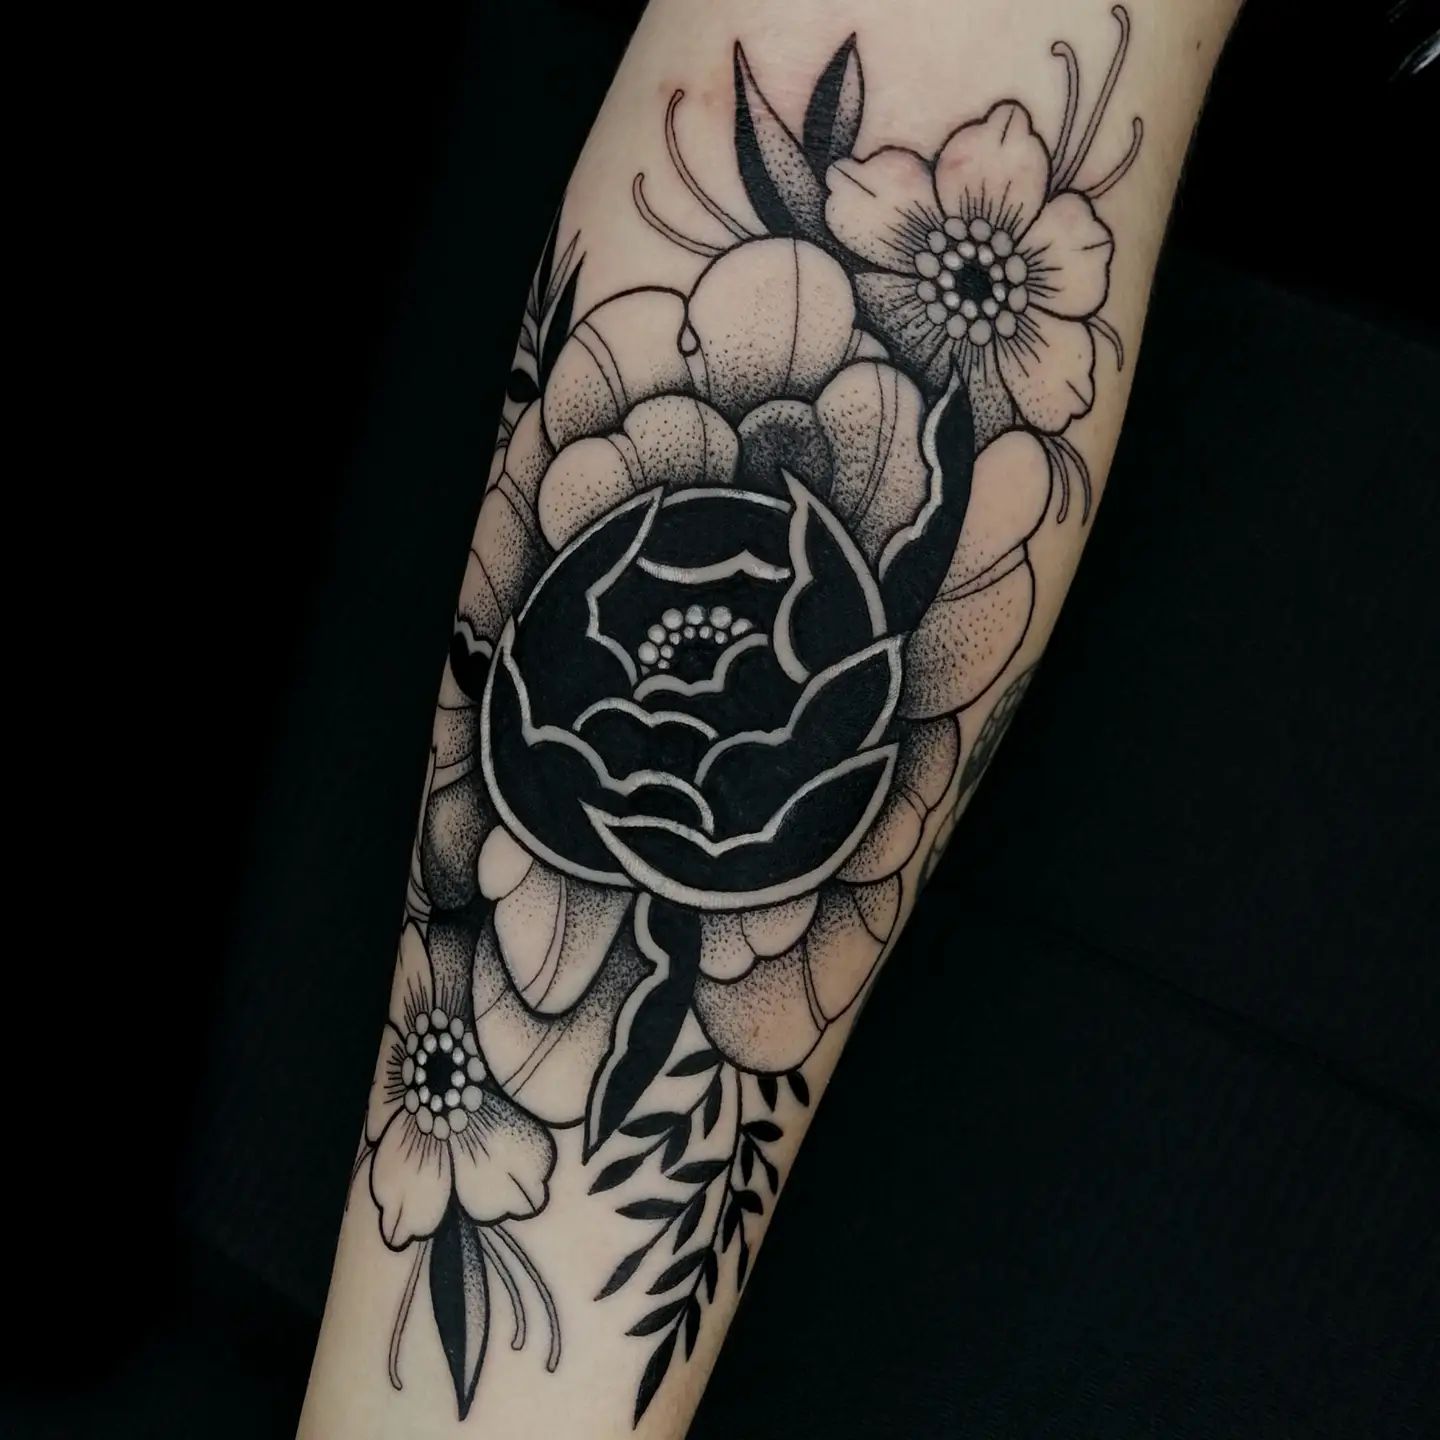 flower tattoo ideas by needle.mistress